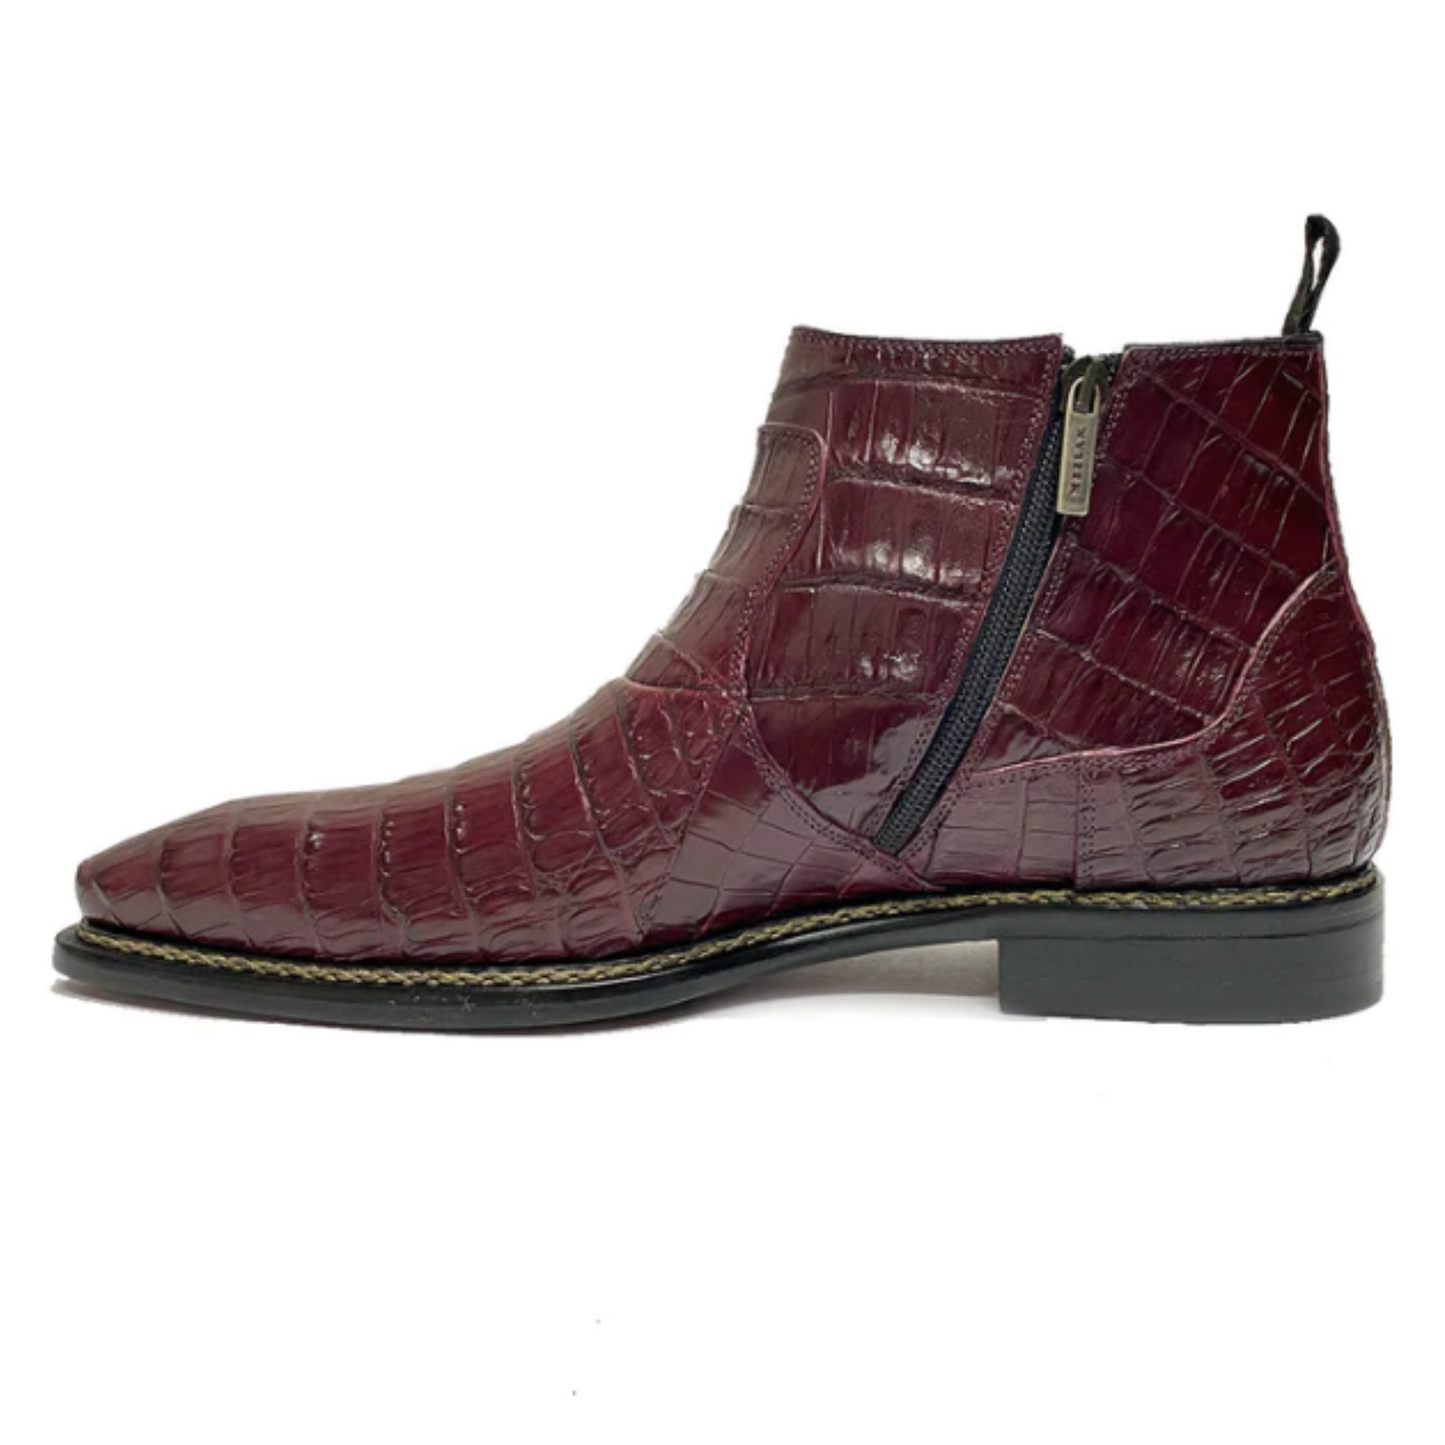 Tailor Made Handmade Bordo Crocodile Print Leather Chelsea Boots